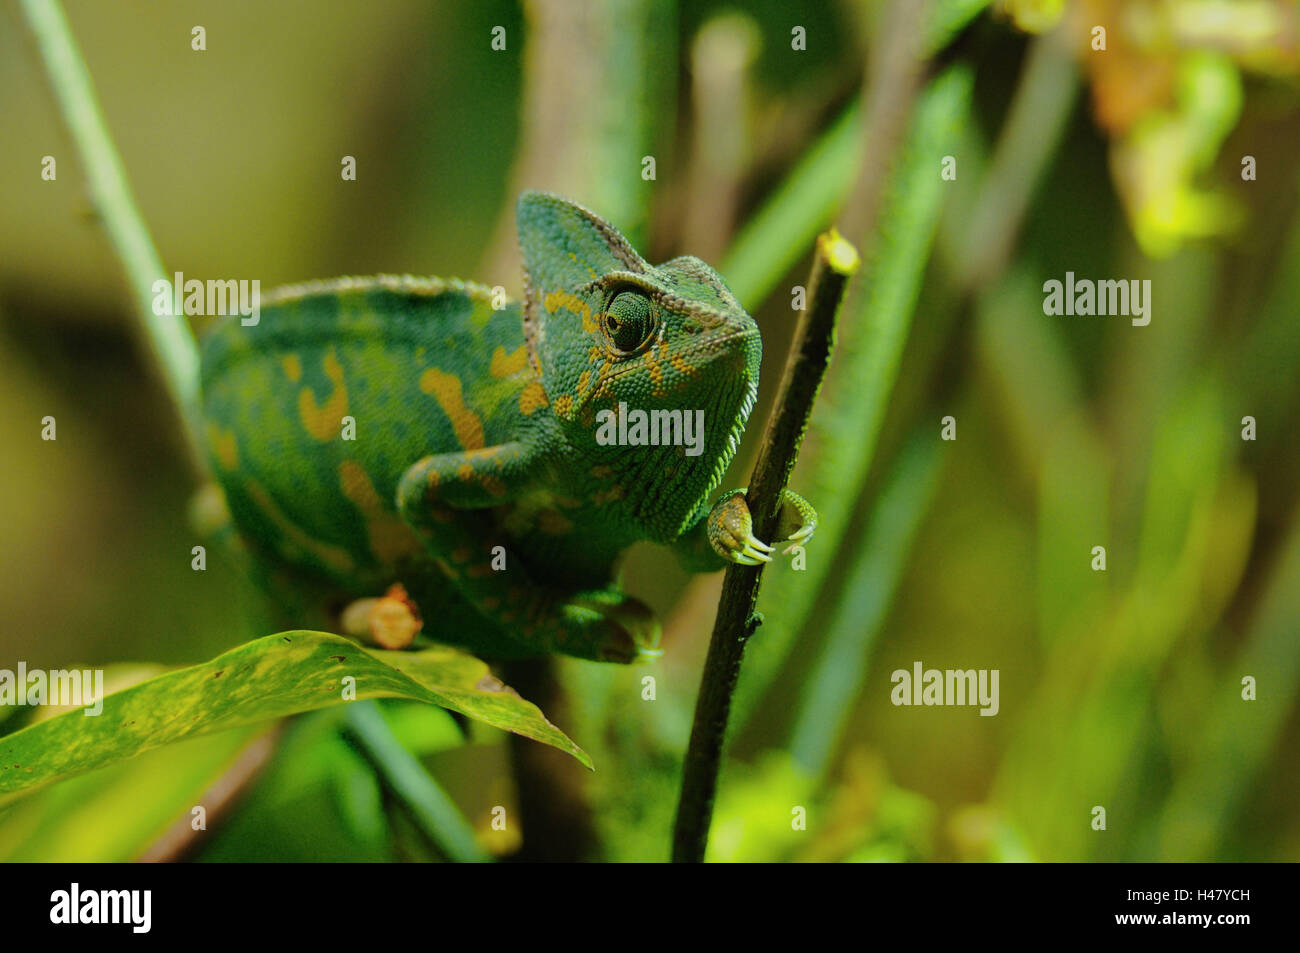 Yemen chameleon, Chamaeleo calyptratus, front view, climbing, looking at camera, Stock Photo